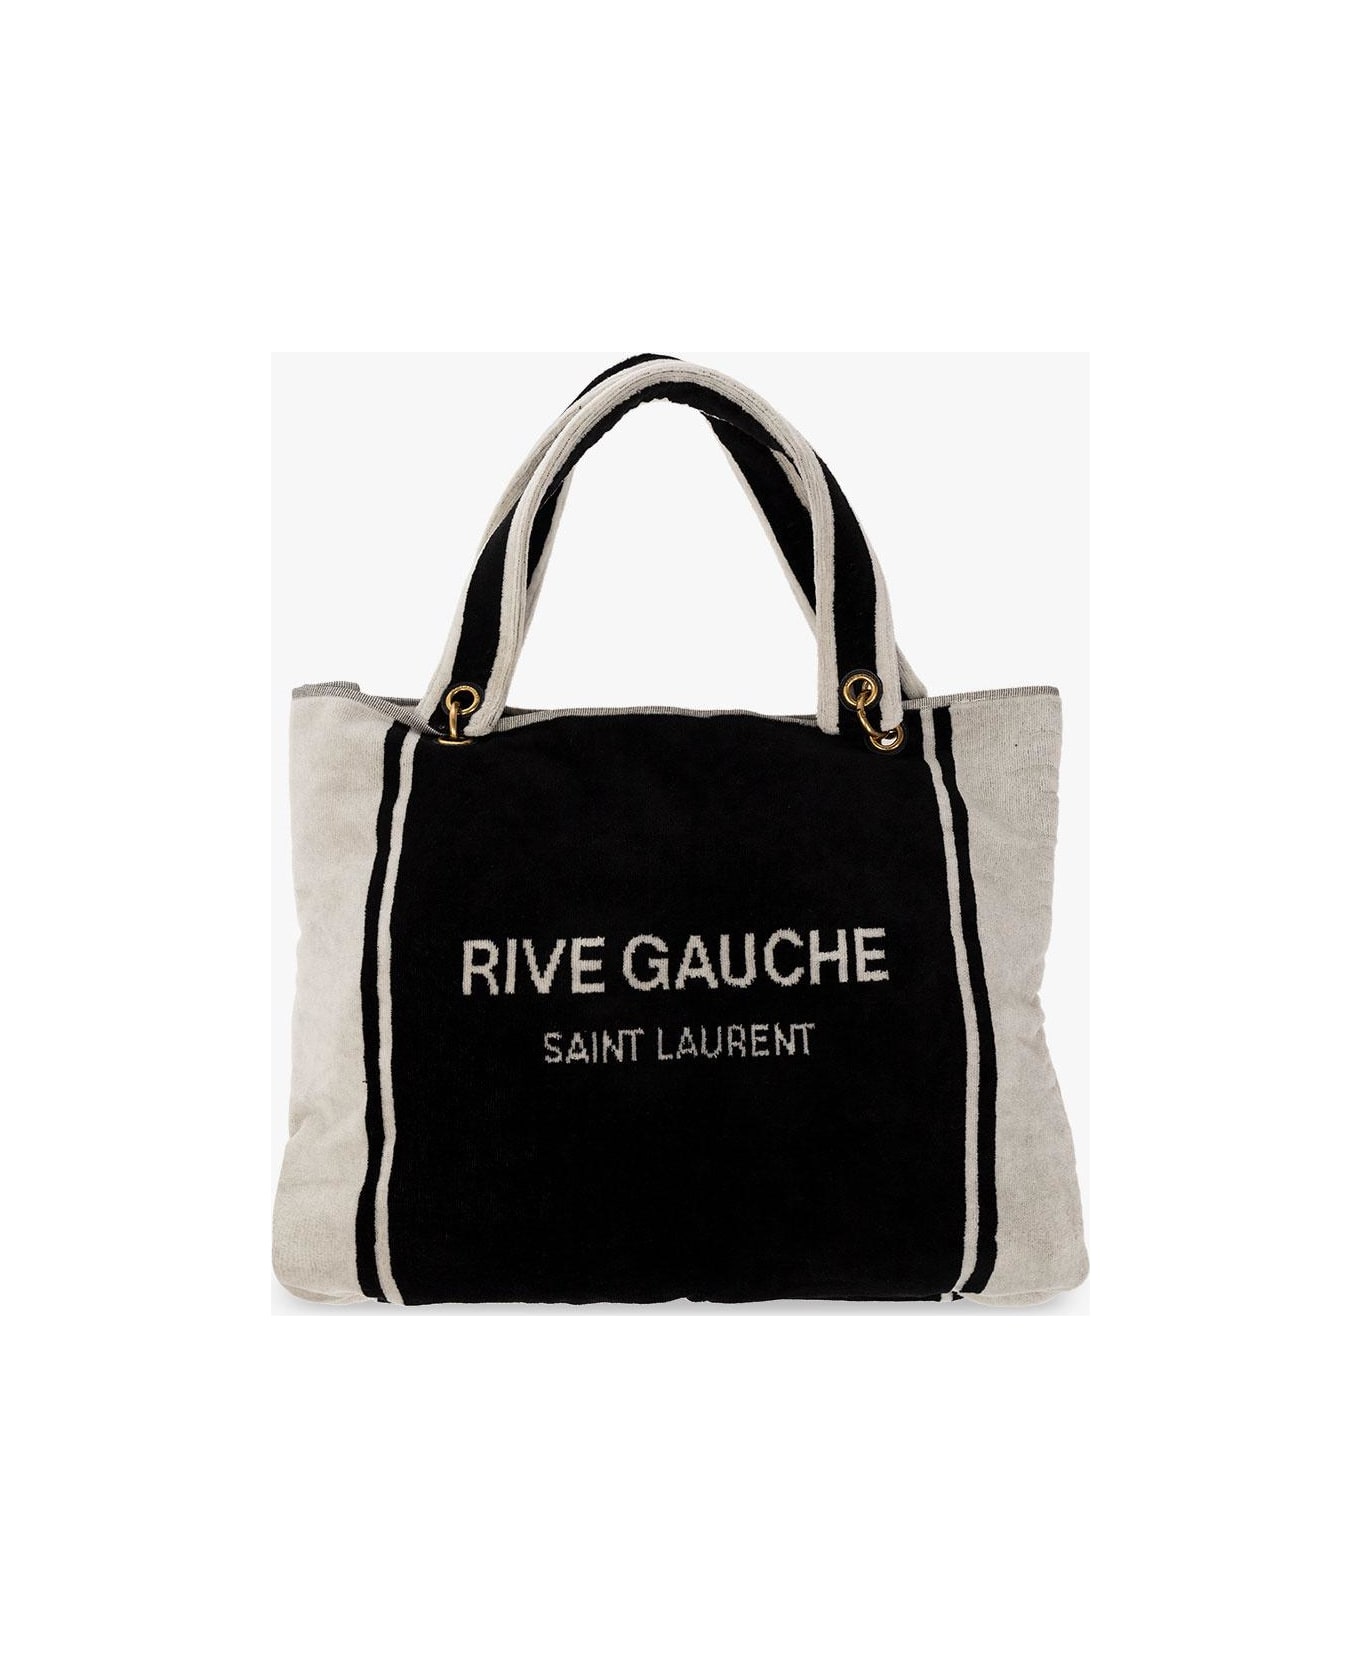 Saint Laurent Rive Gauche Tote - Nero/bianco/nero トートバッグ